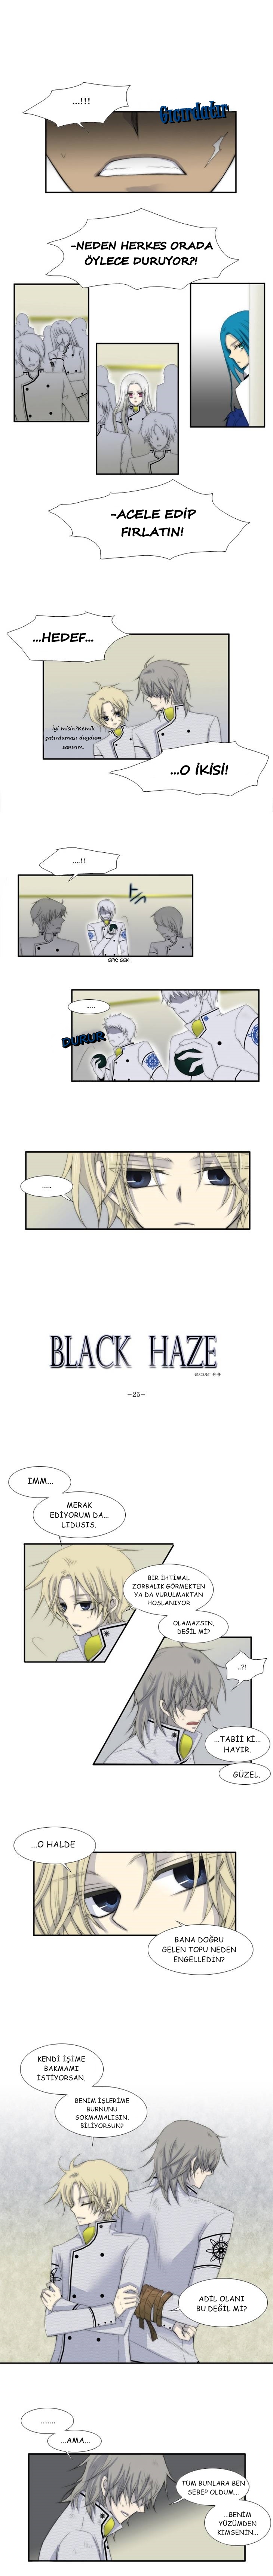 Black Haze: Chapter 25 - Page 2